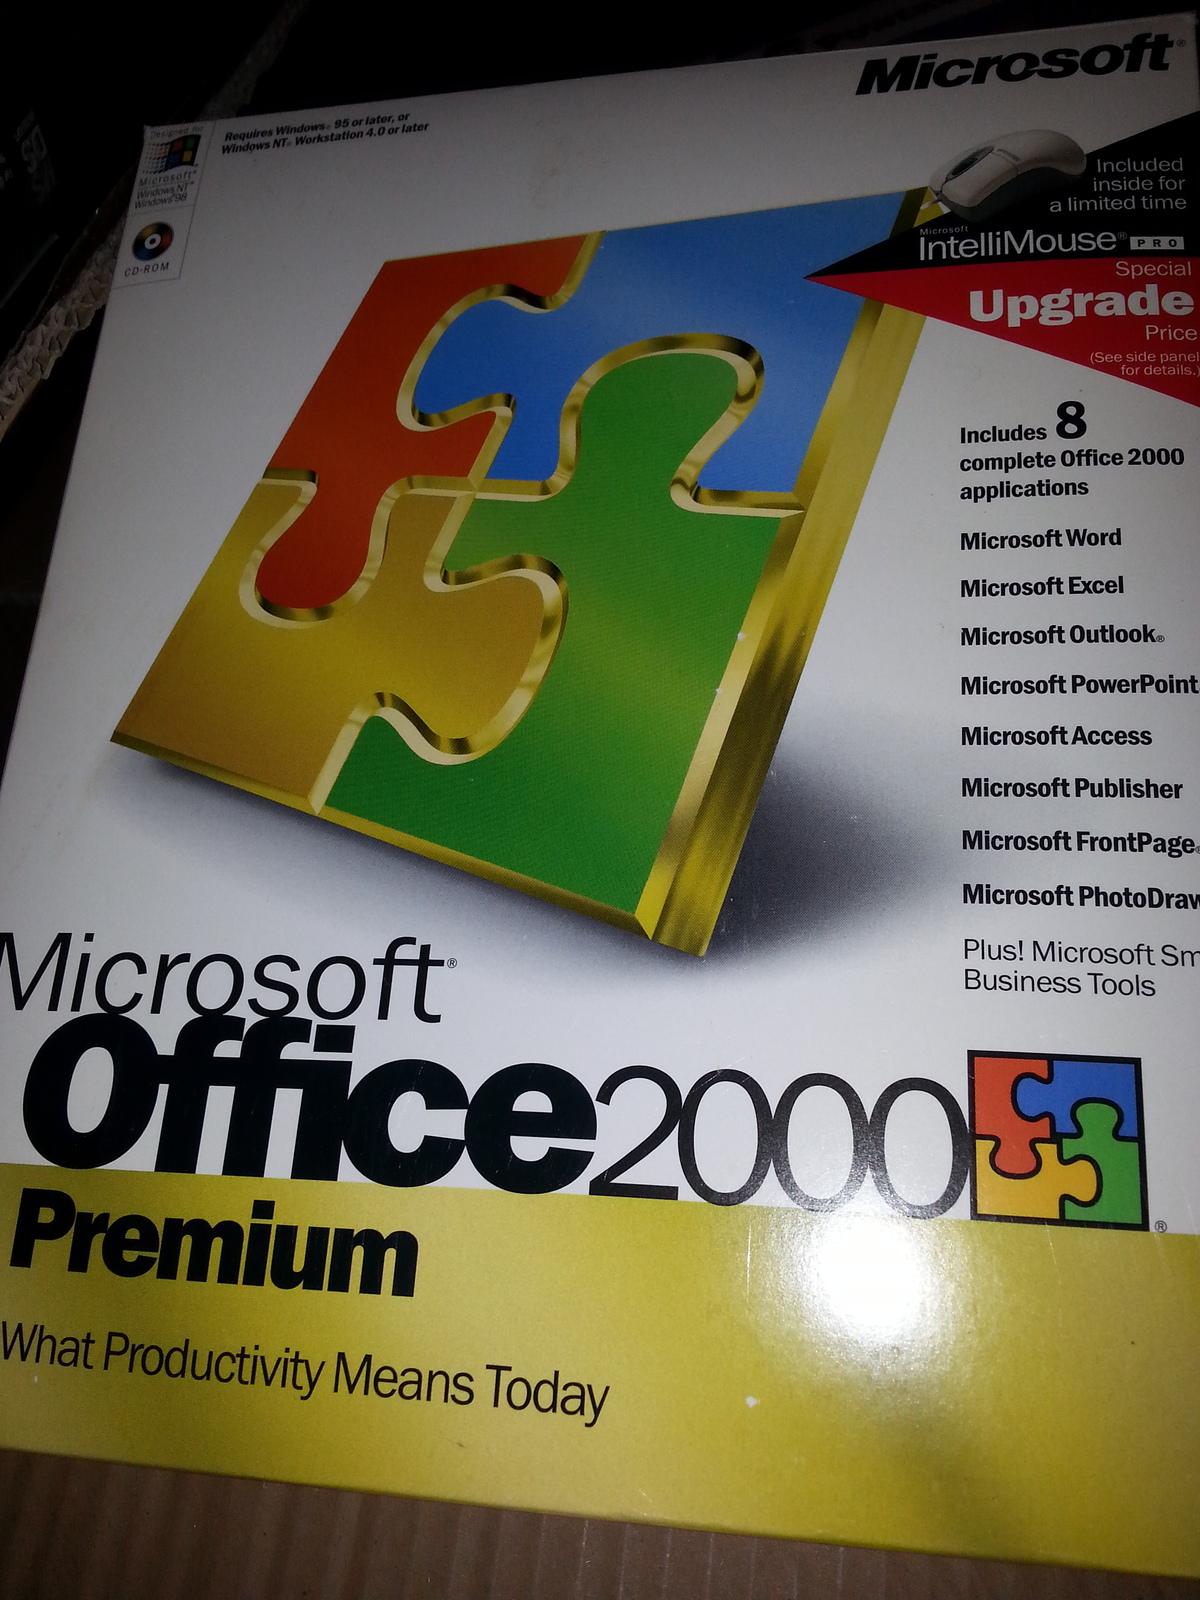 Windows Office 2000 Premium Upgrade and 13 similar items